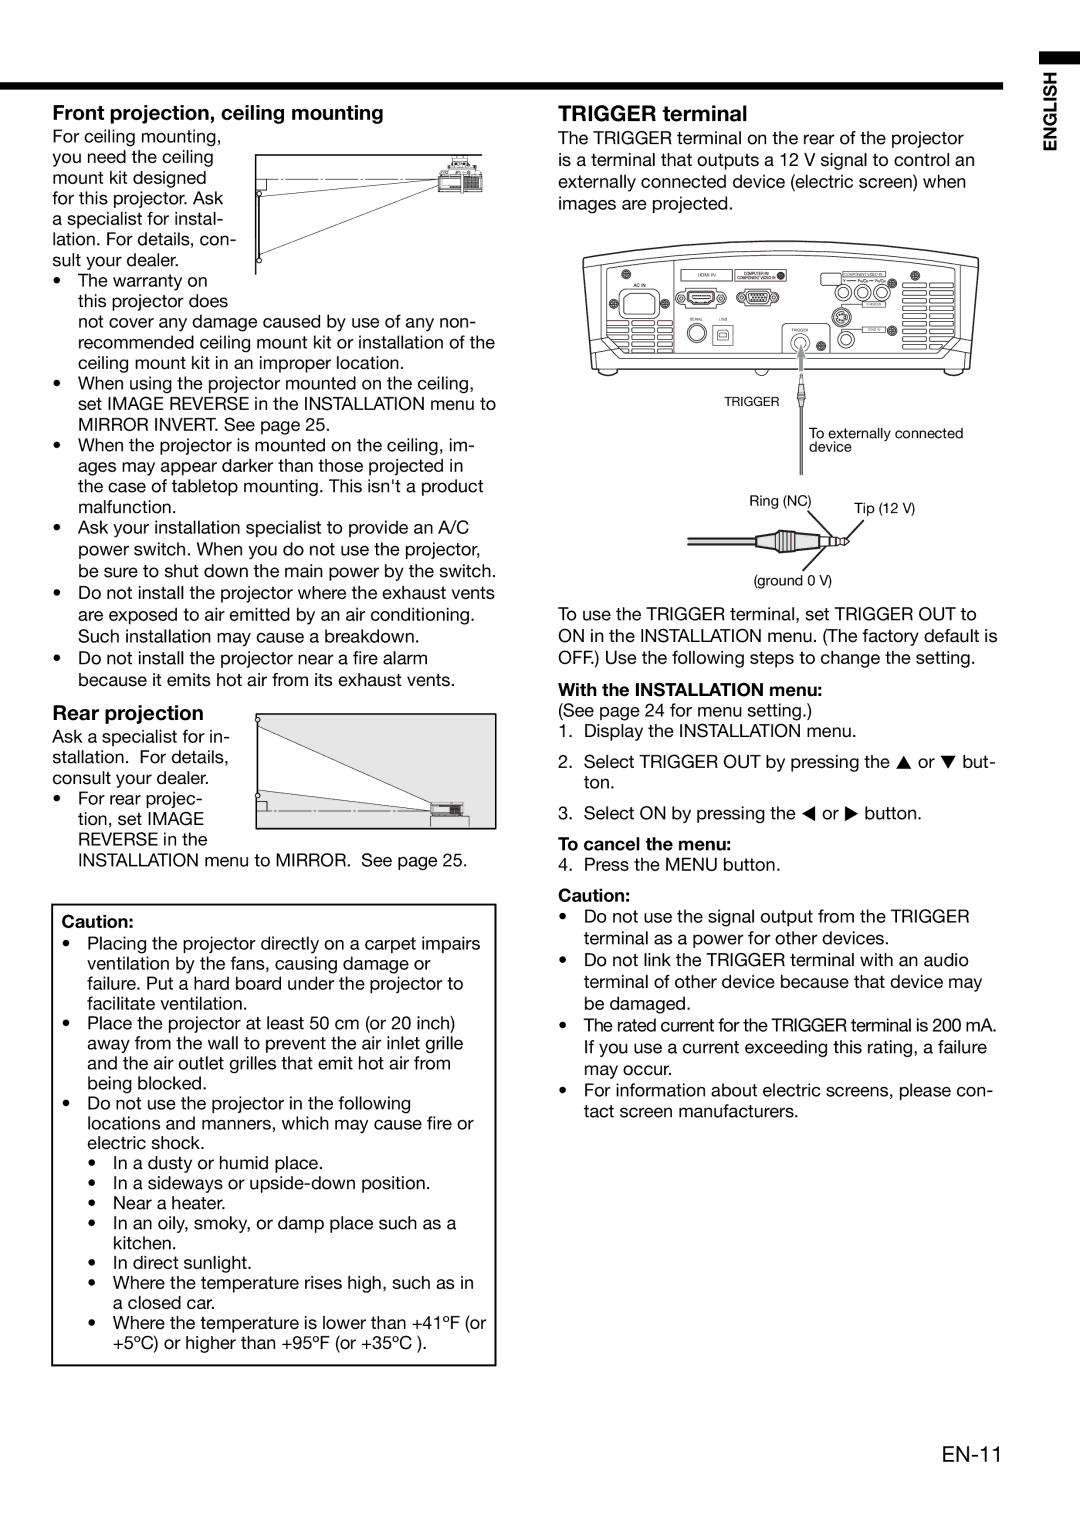 Mitsubishi Electronics HD4000 user manual Trigger terminal, EN-11, With the Installation menu See page 24 for menu setting 